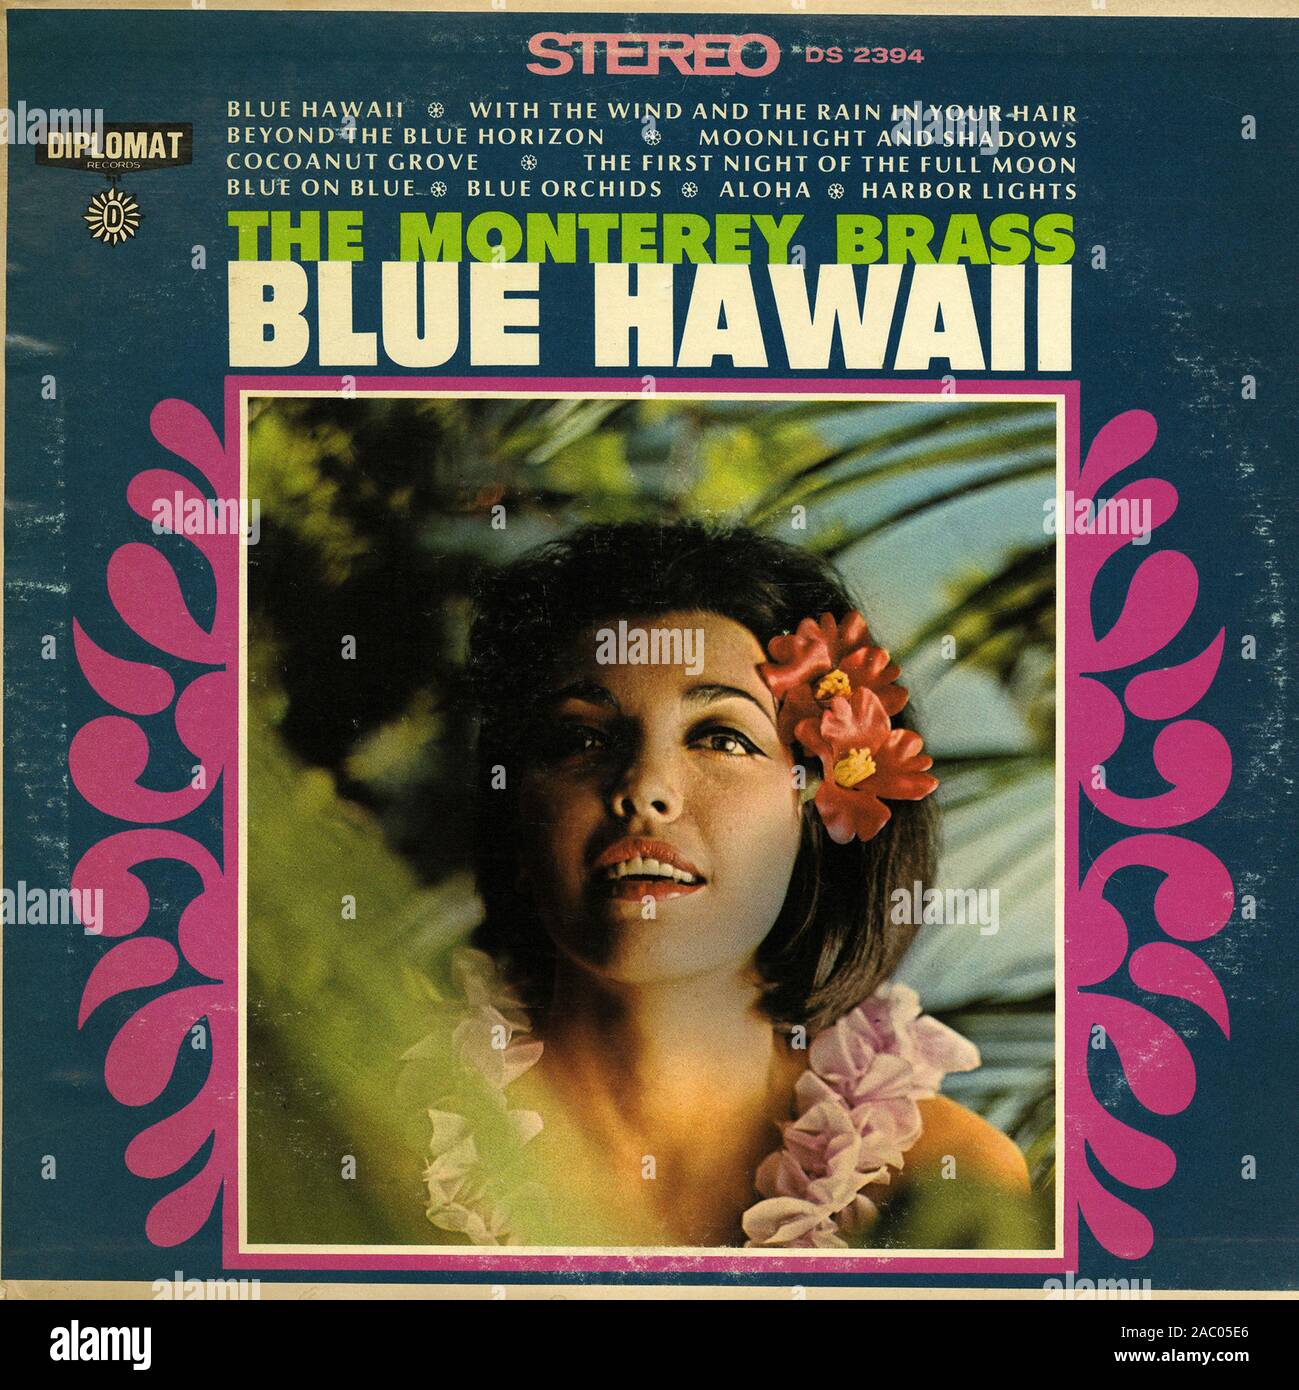 The Monterey Brass - Blue Hawaii - Vintage vinyl album cover Stock Photo